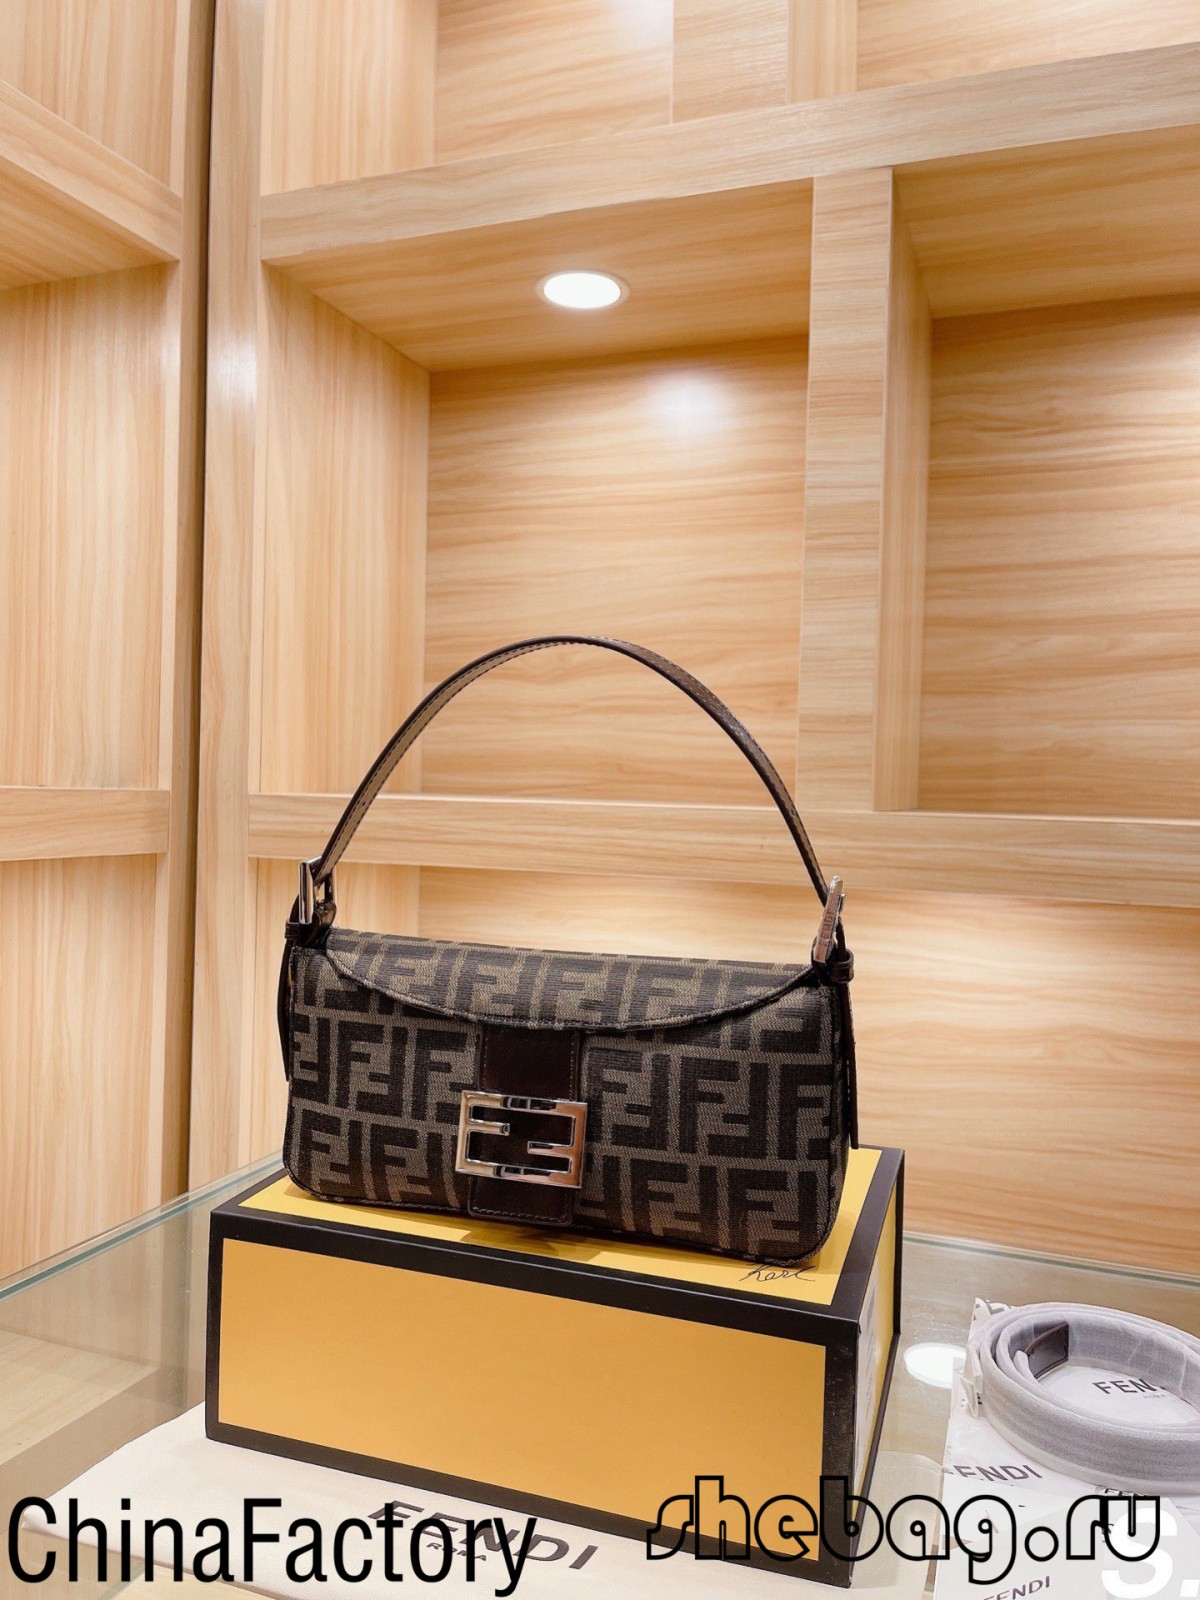 ʻO nā ʻeke hoʻopiʻi Fendi maikaʻi loa: Fendi Baguette (2022 Hotest)-Kōleʻa maikaʻi loa Fake Louis Vuitton Bag Online Store, Replica designer bag ru